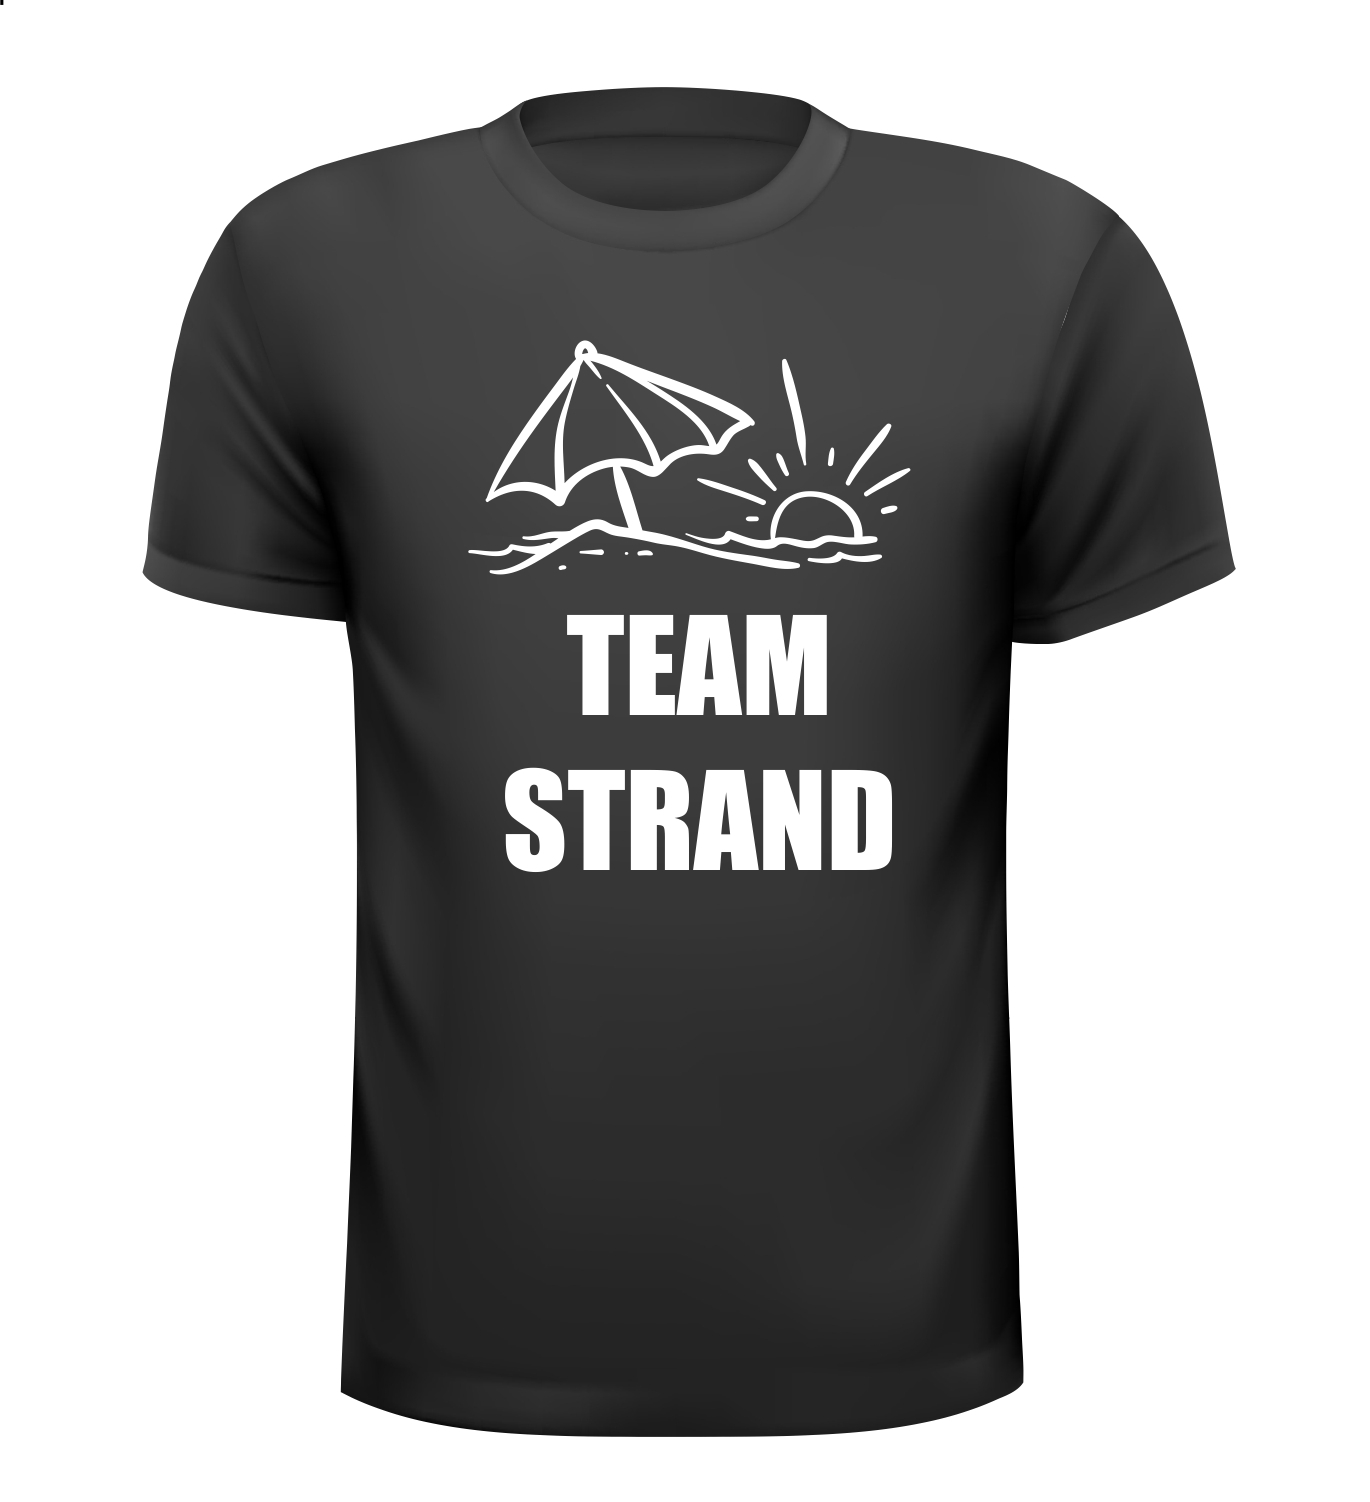 Shirtje voor team strand